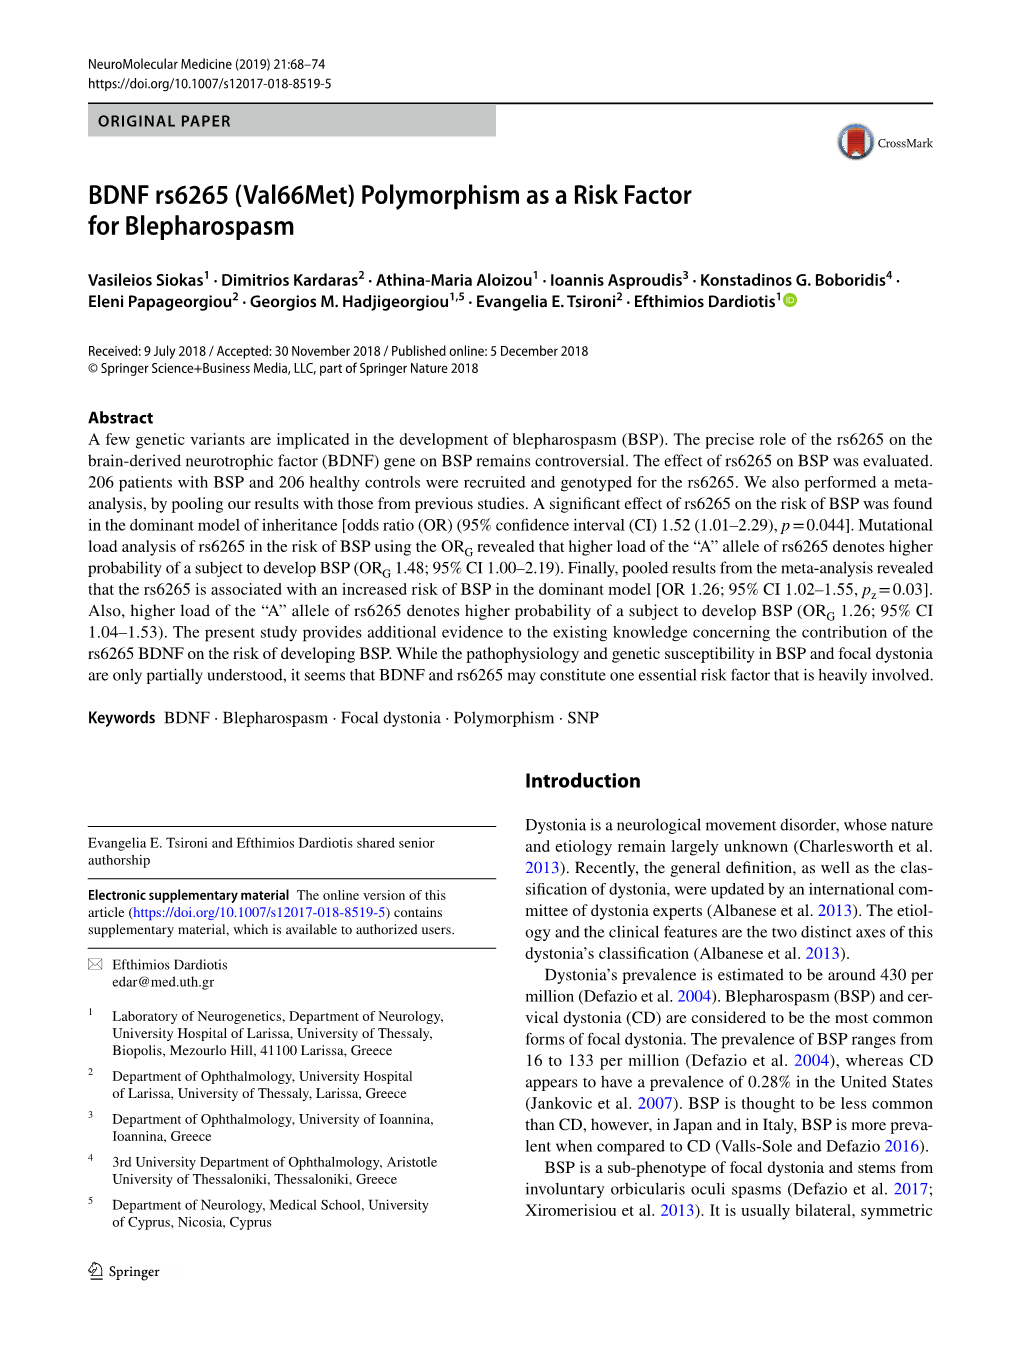 BDNF Rs6265 (Val66met) Polymorphism As a Risk Factor for Blepharospasm